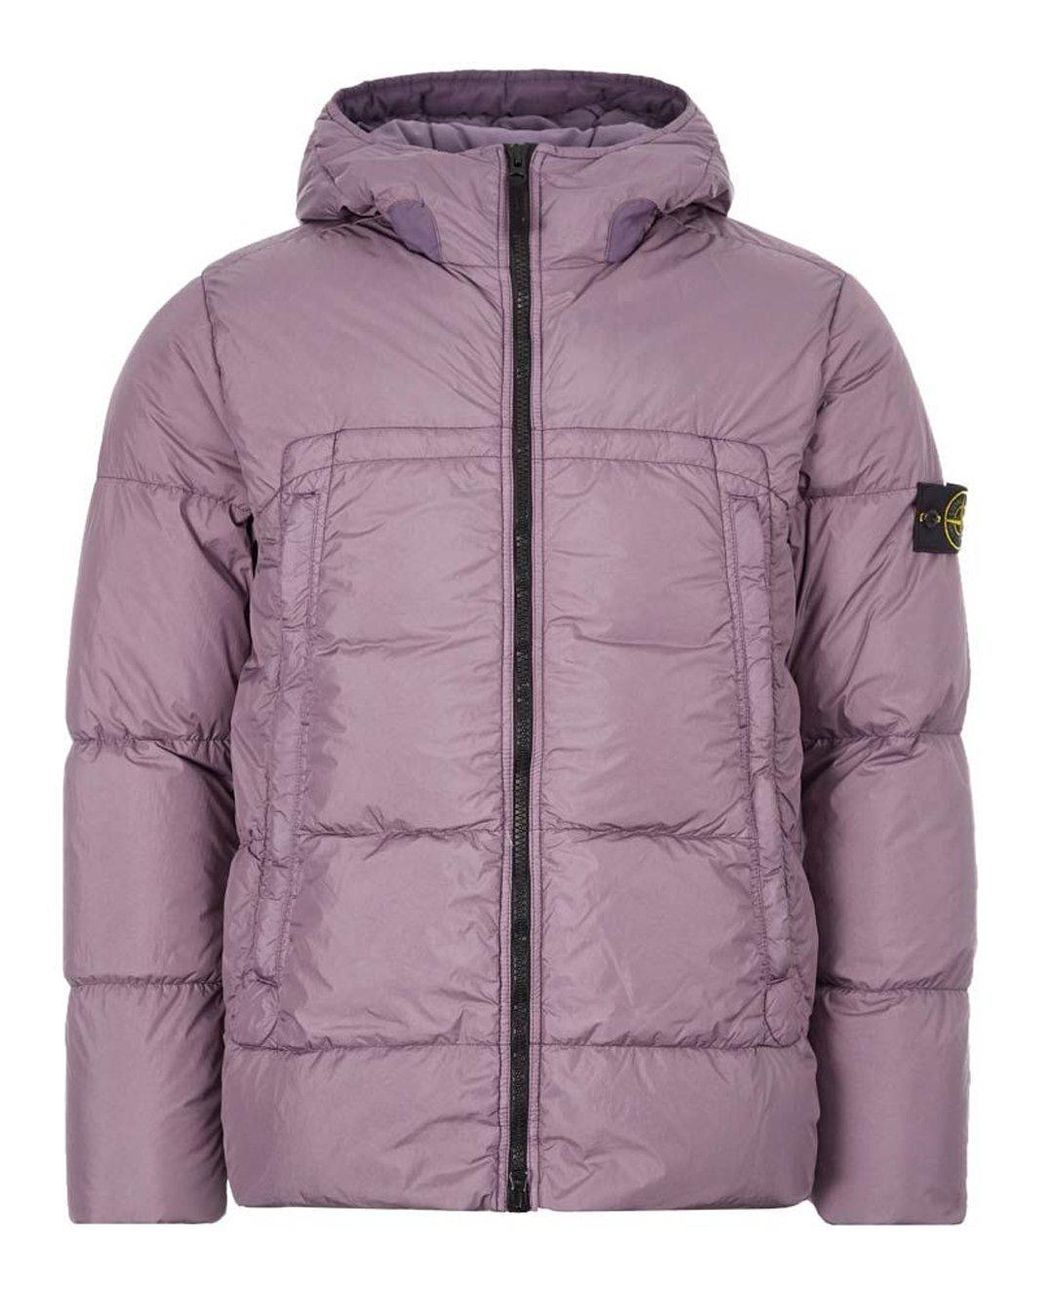 Stone Island Crinkle Rep Puffer Jacket in Purple for Men | Lyst UK